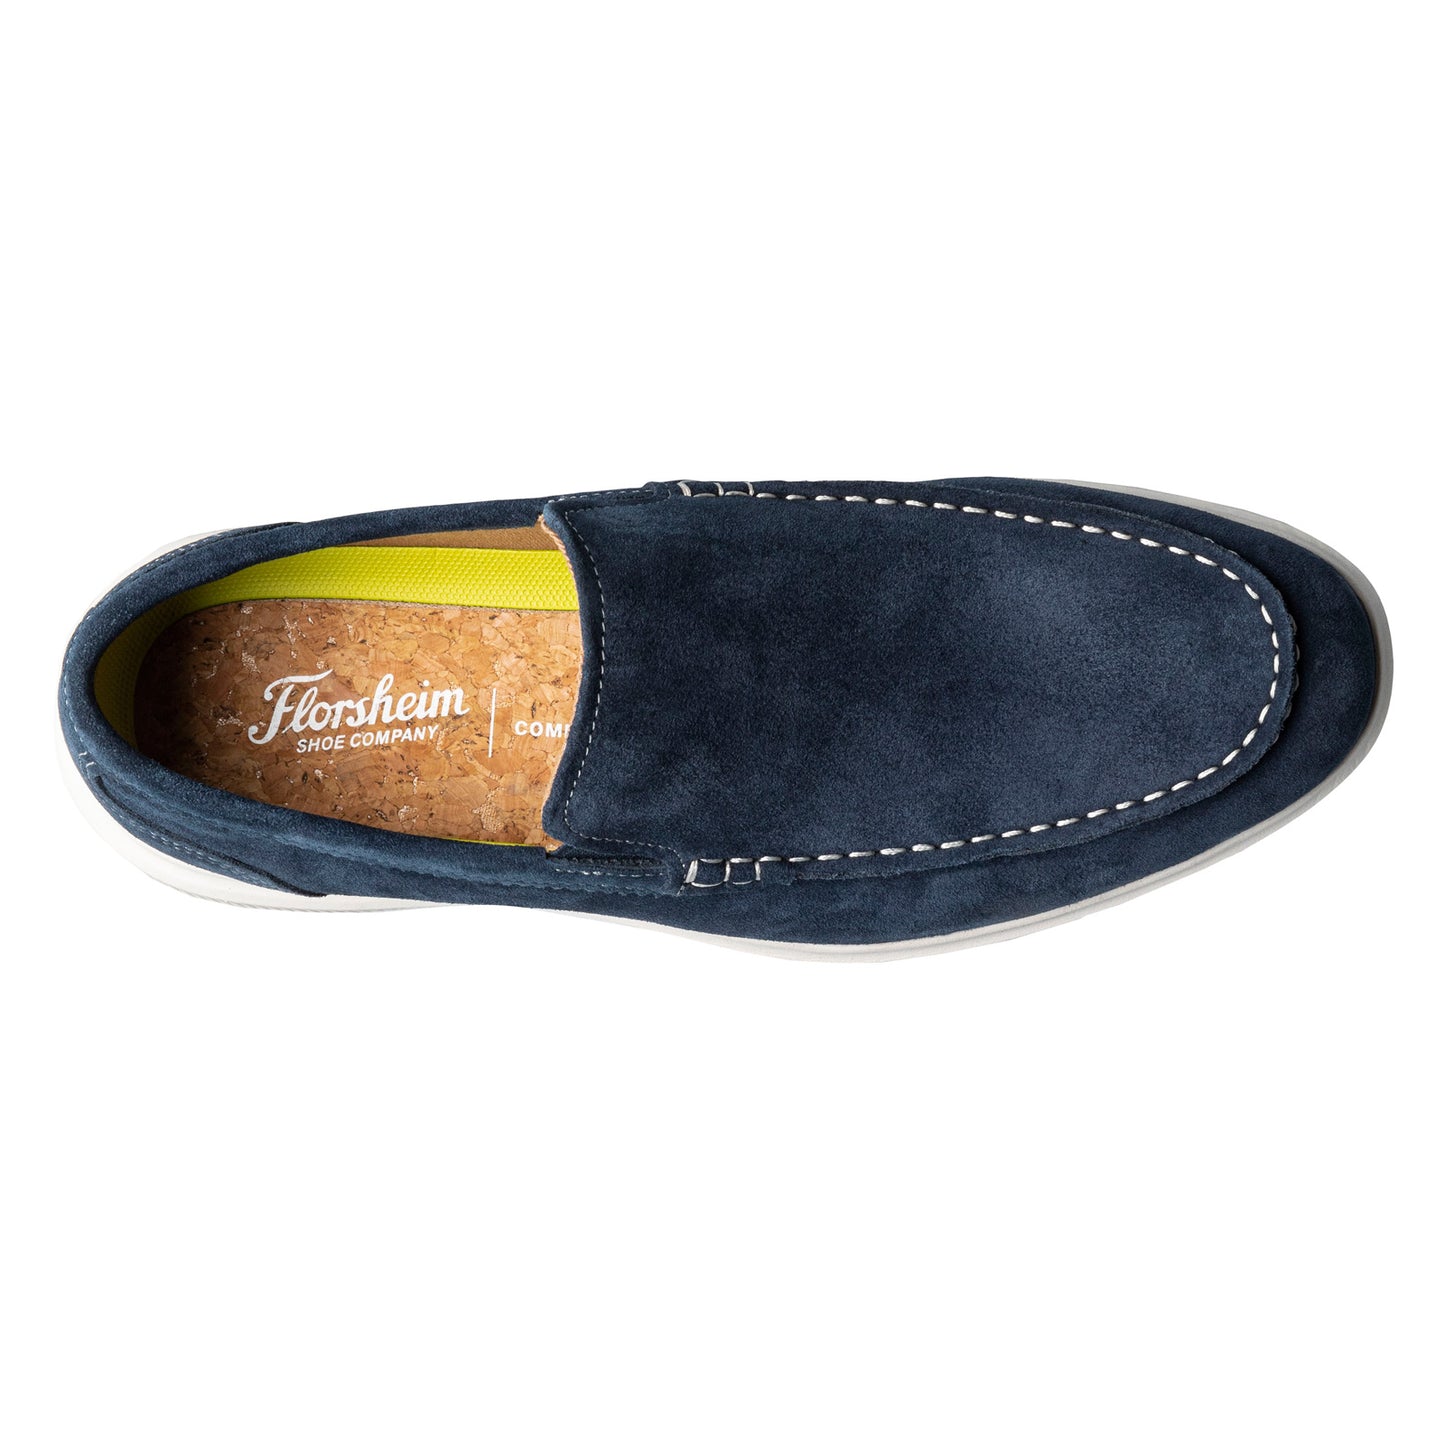 Peltz Shoes  Men's Florsheim Hamptons Moc Toe Venetian Loafer NAVY SUEDE 14397-415